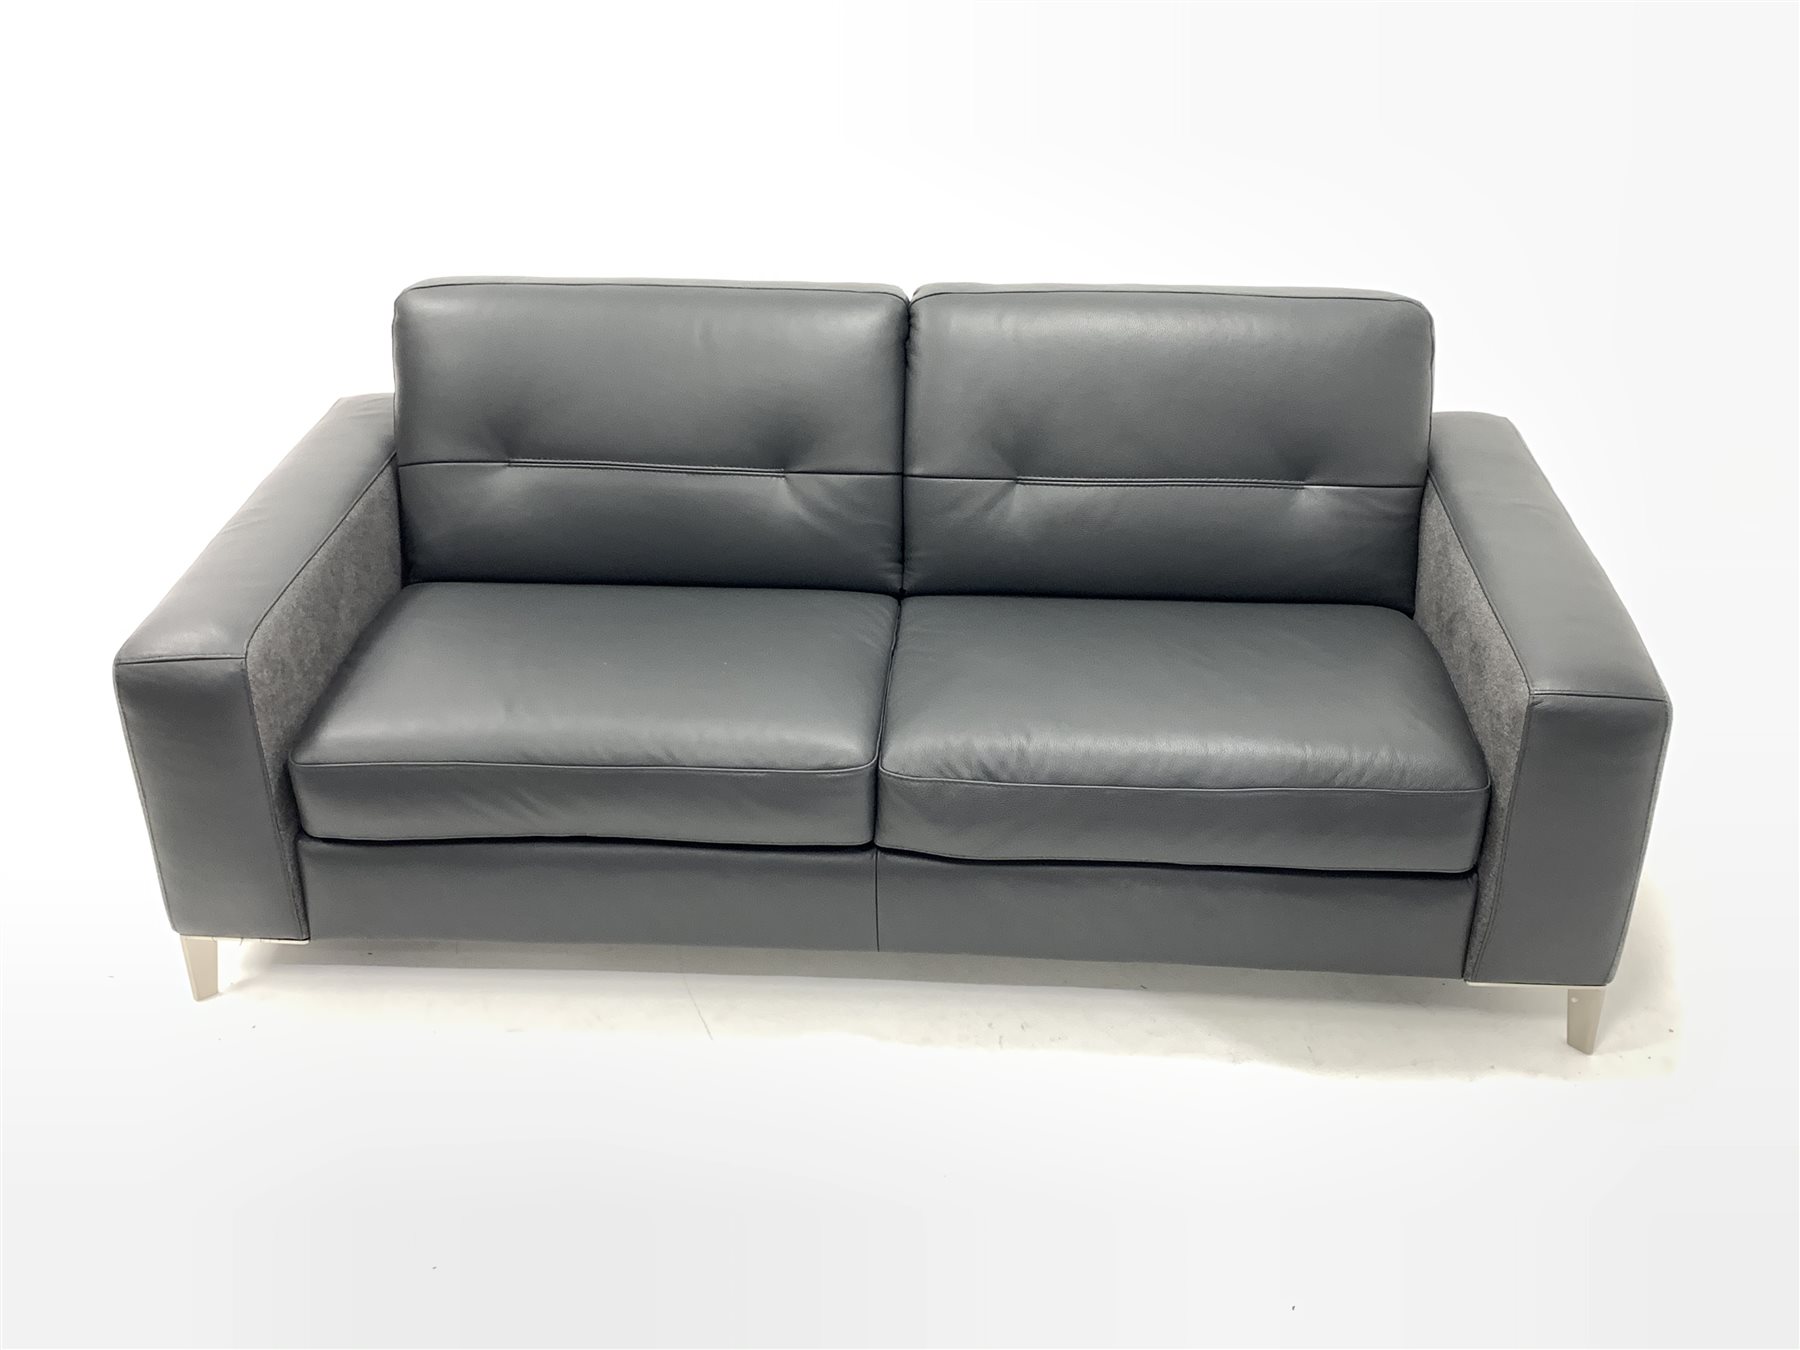 grey leather sofa bed uk